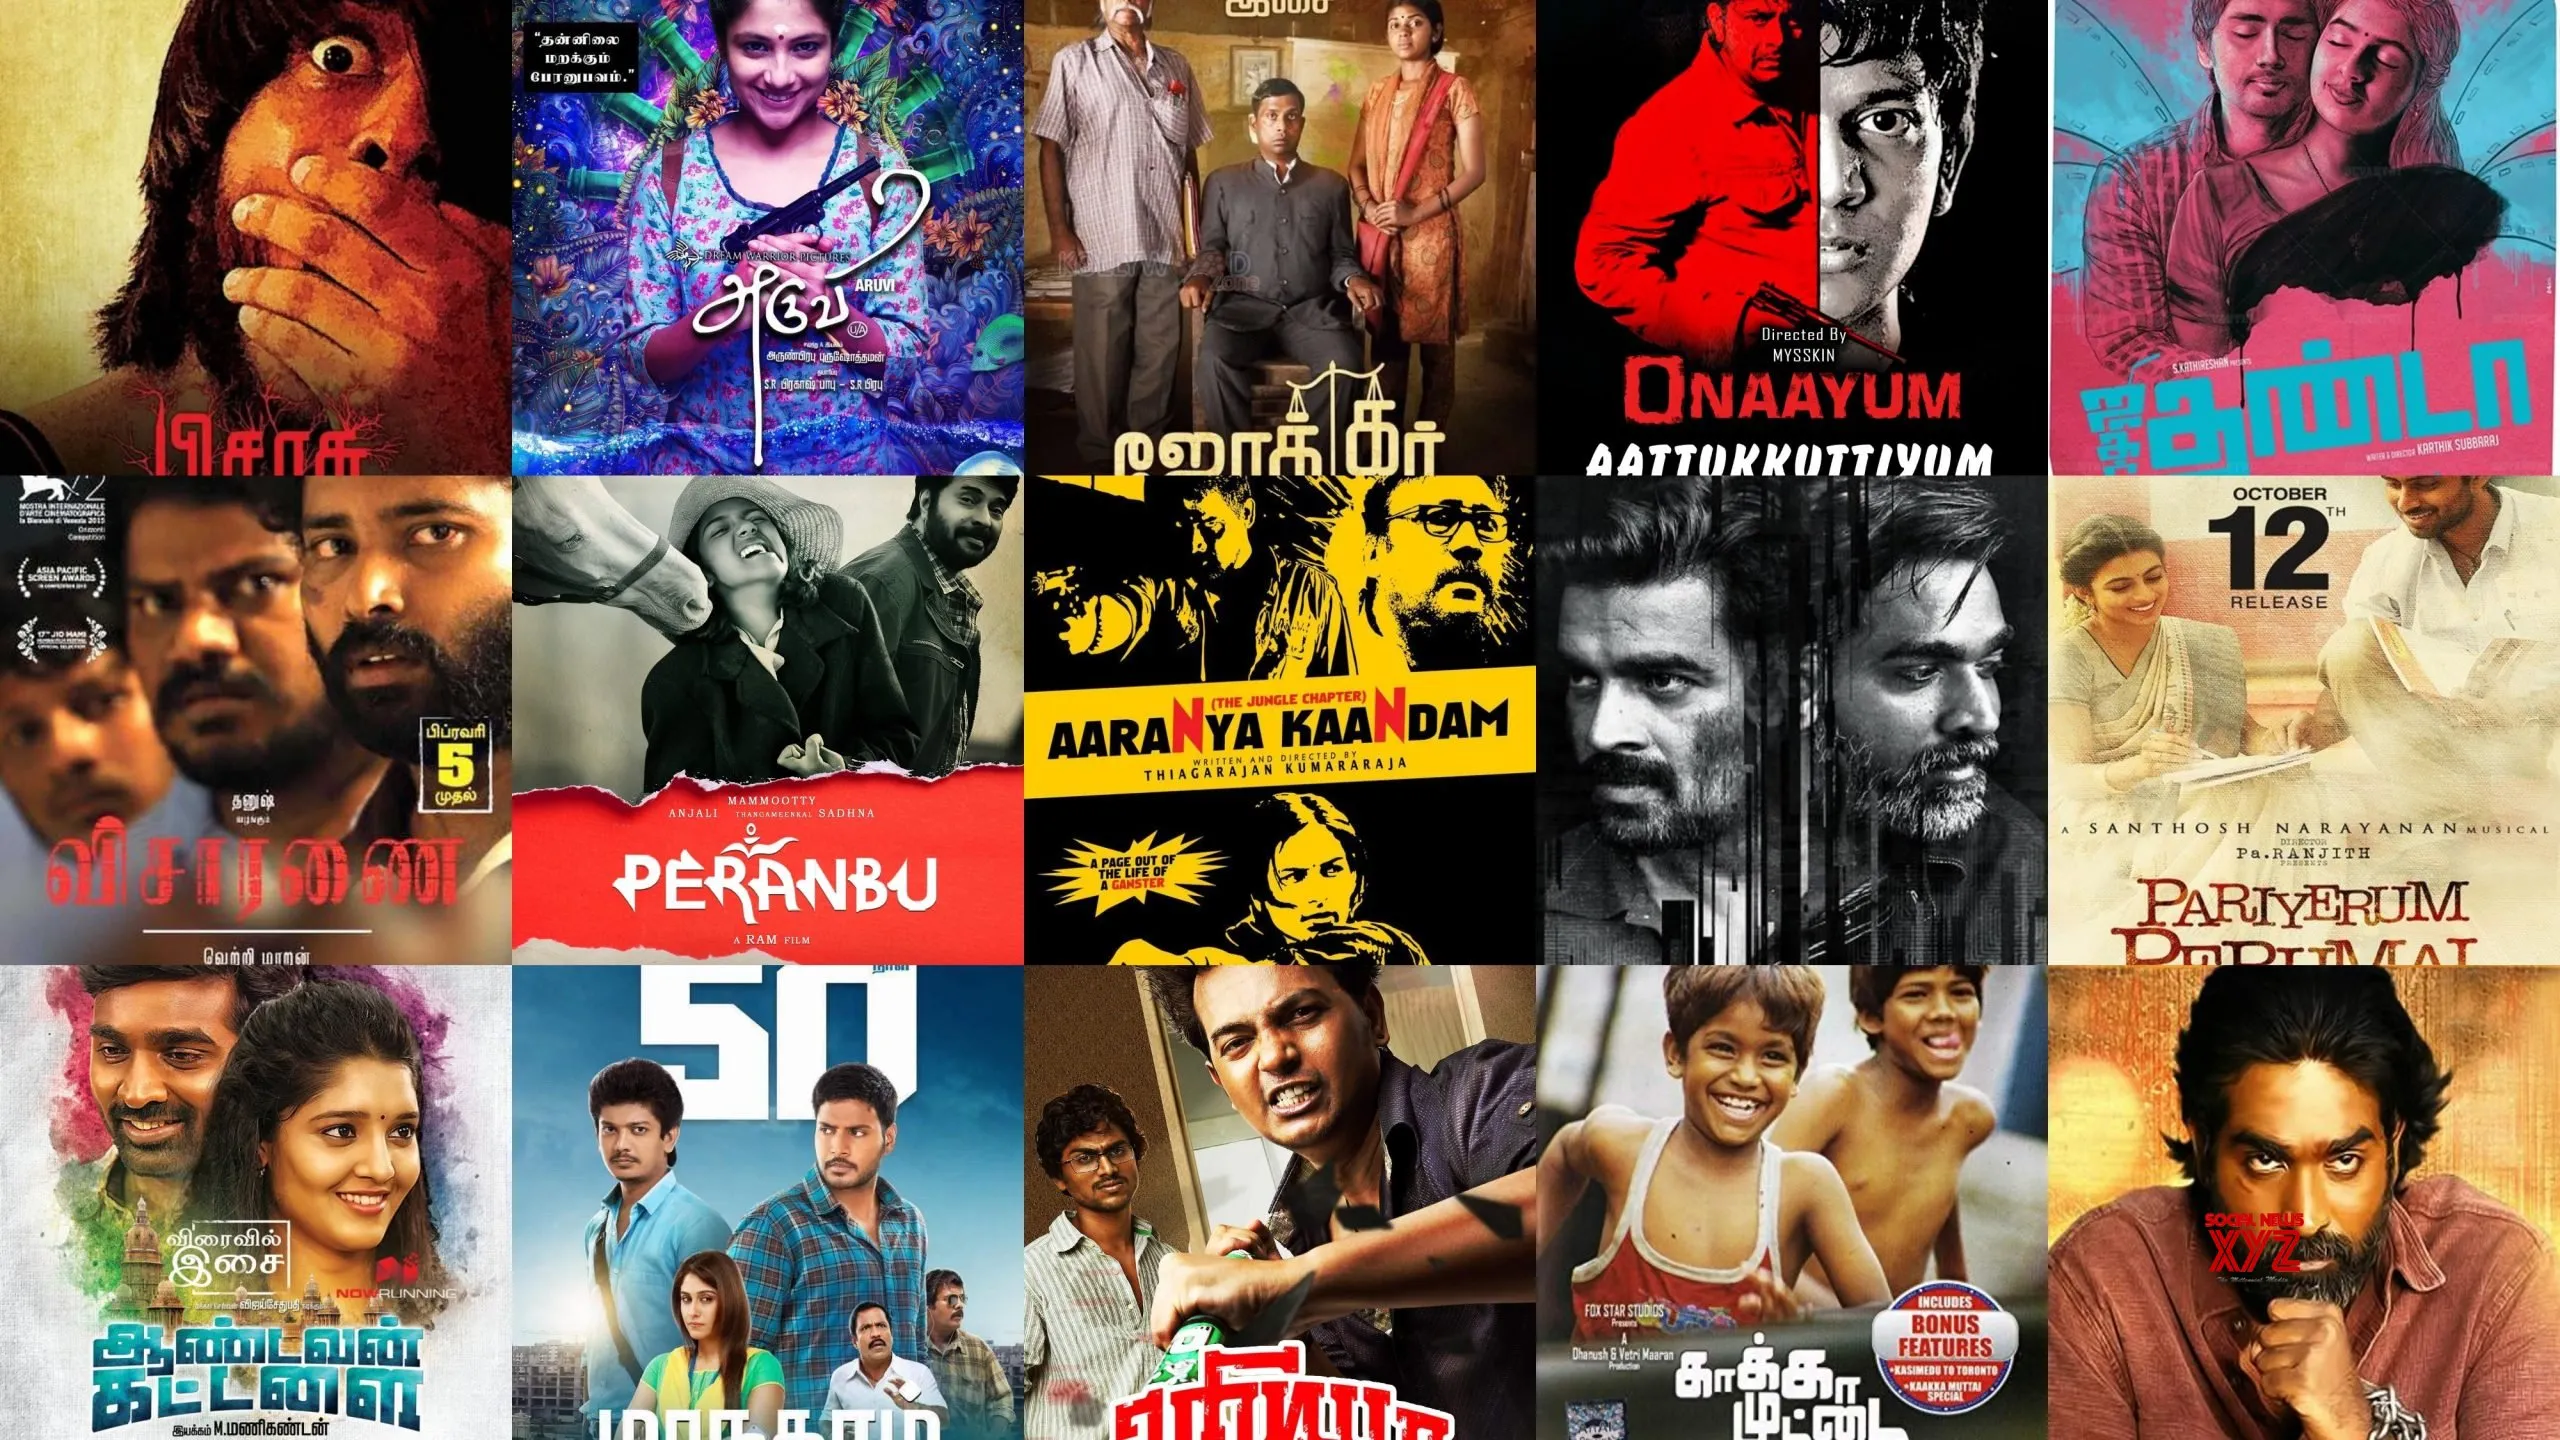 alberto aballe share hindi punjabi movie download photos